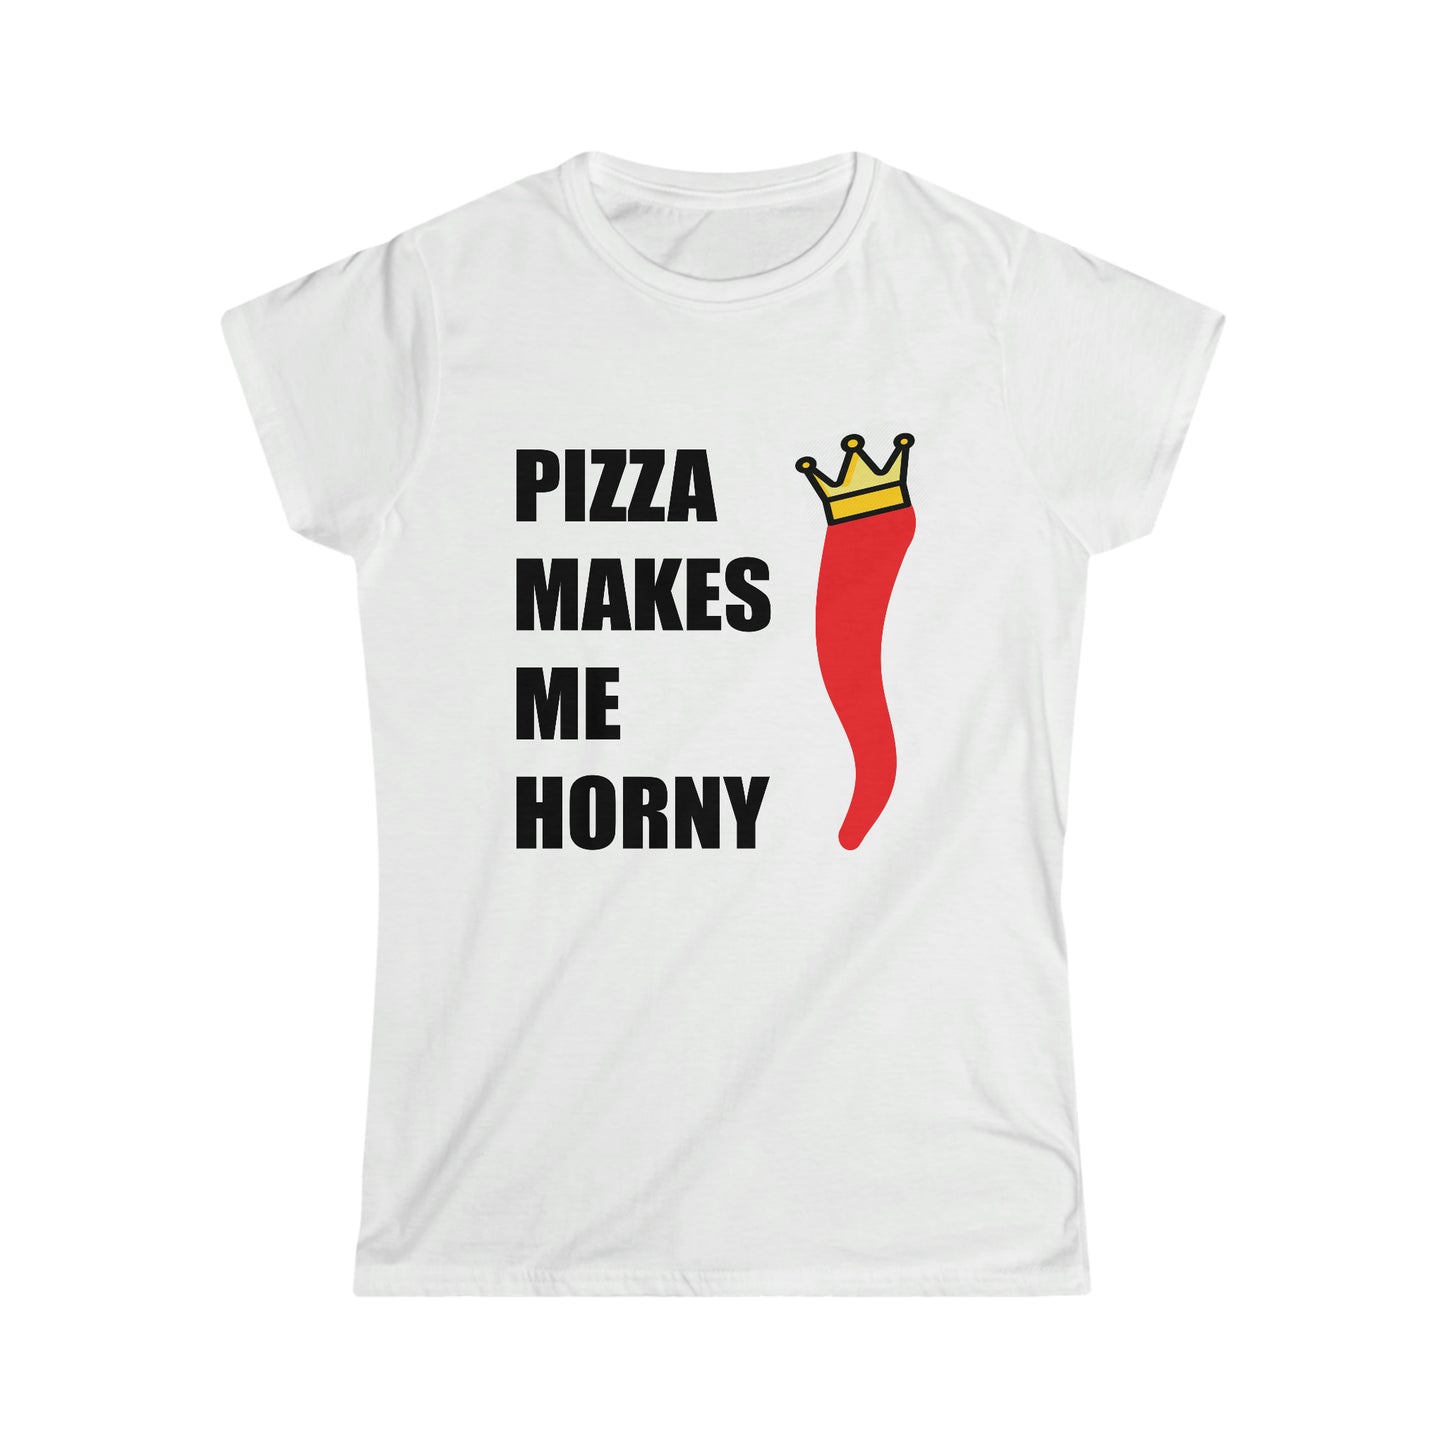 PIZZA MAKES ME HORNY